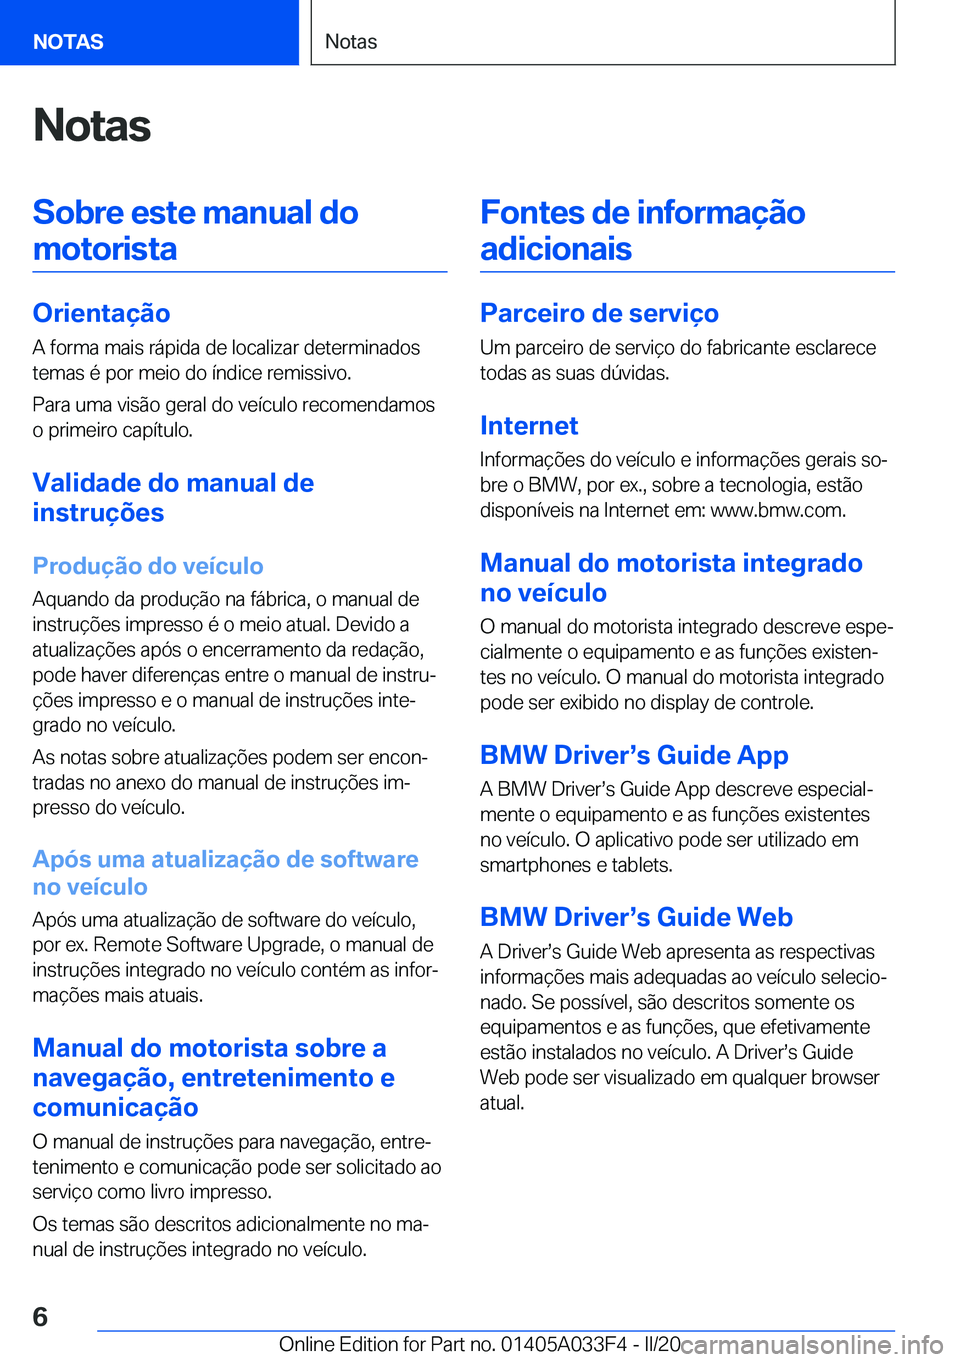 BMW X5 M 2020  Manual do condutor (in Portuguese) �N�o�t�a�s�S�o�b�r�e��e�s�t�e��m�a�n�u�a�l��d�o�m�o�t�o�r�i�s�t�a
�O�r�i�e�n�t�a�